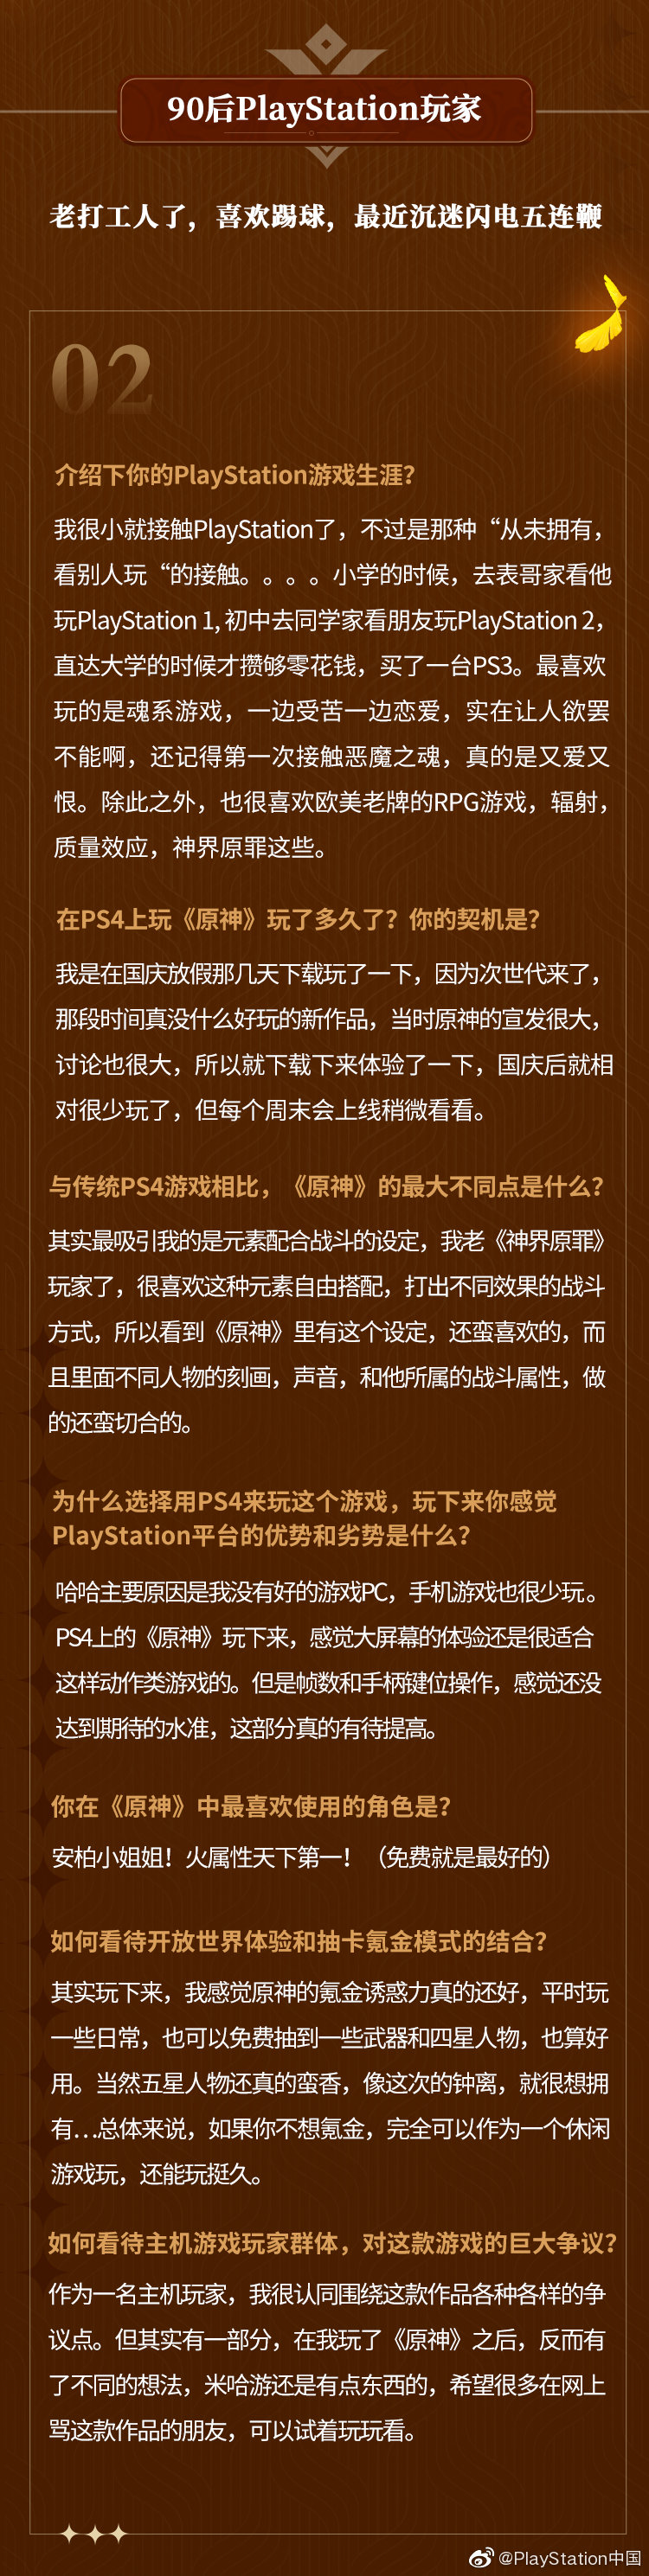 PlayStation中國官微曬00、90、80後玩家對《原神》評價